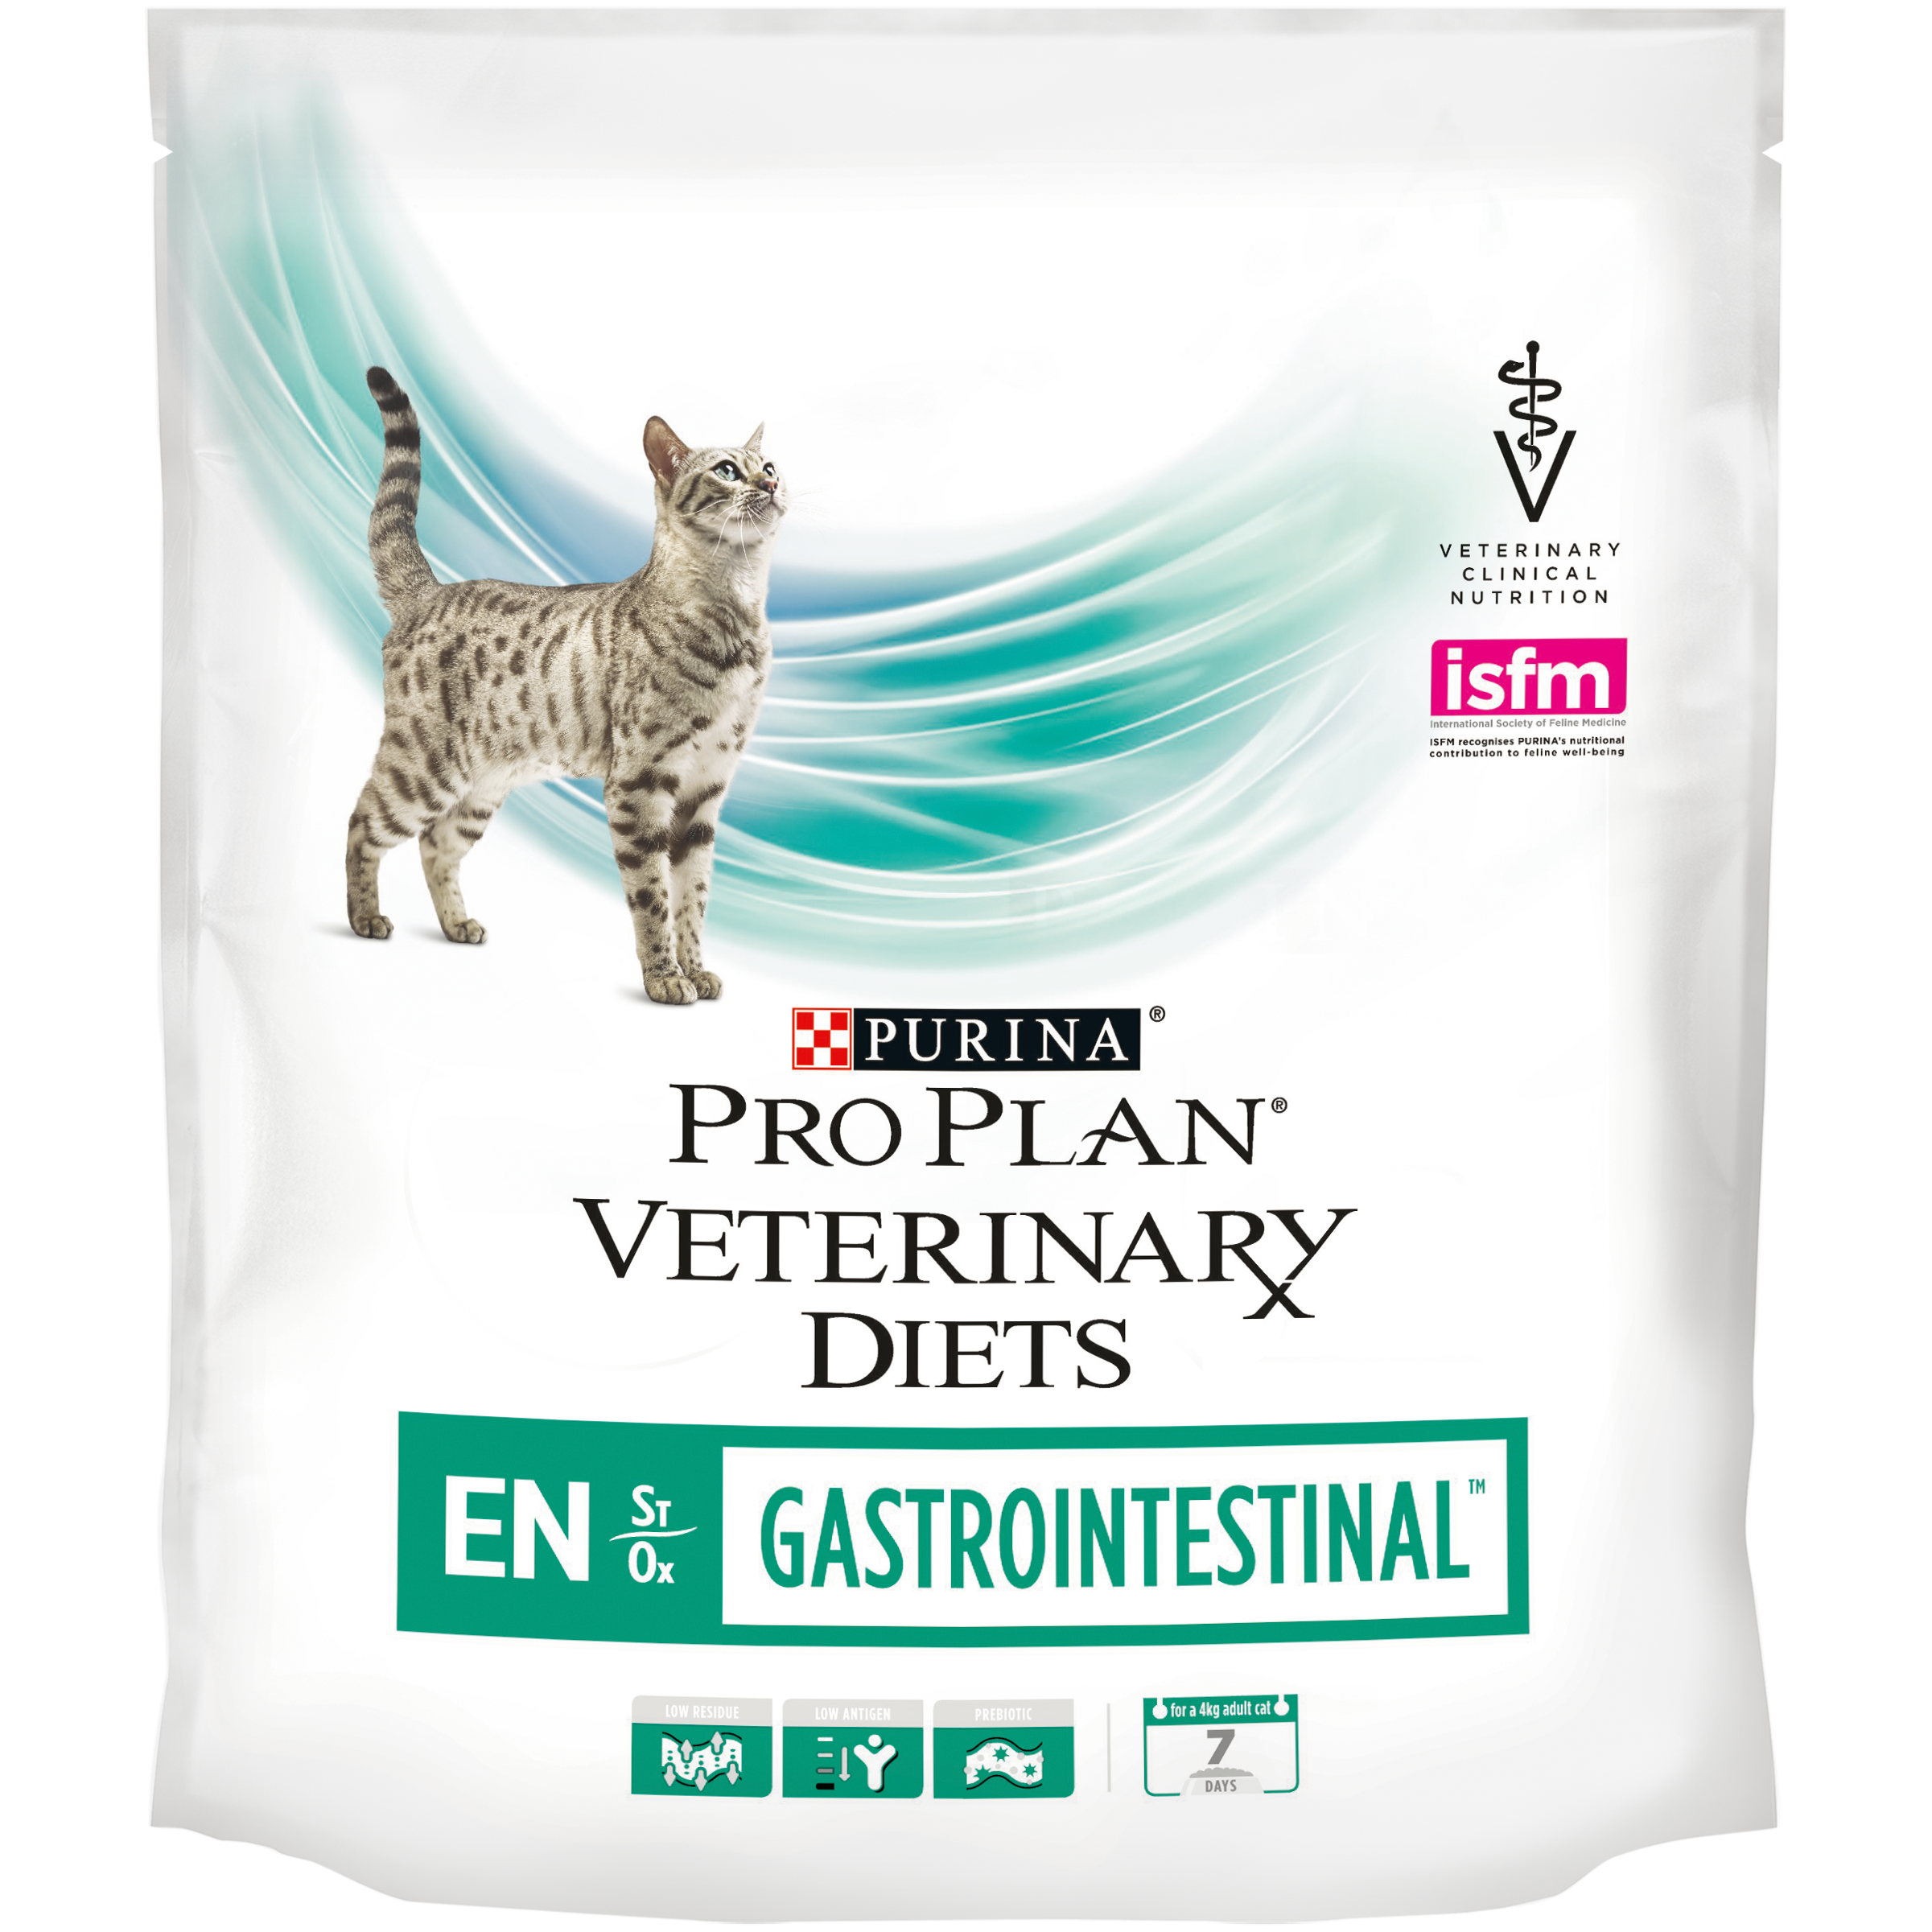 Pro Plan Veterinary Diets Hypoallergenic для кошек. Purina Pro Plan Veterinary Diets Gastrointestinal для кошек. Проплан Уринари для кошек сухой. Pro Plan Veterinary Diets ha Hypoallergenic.